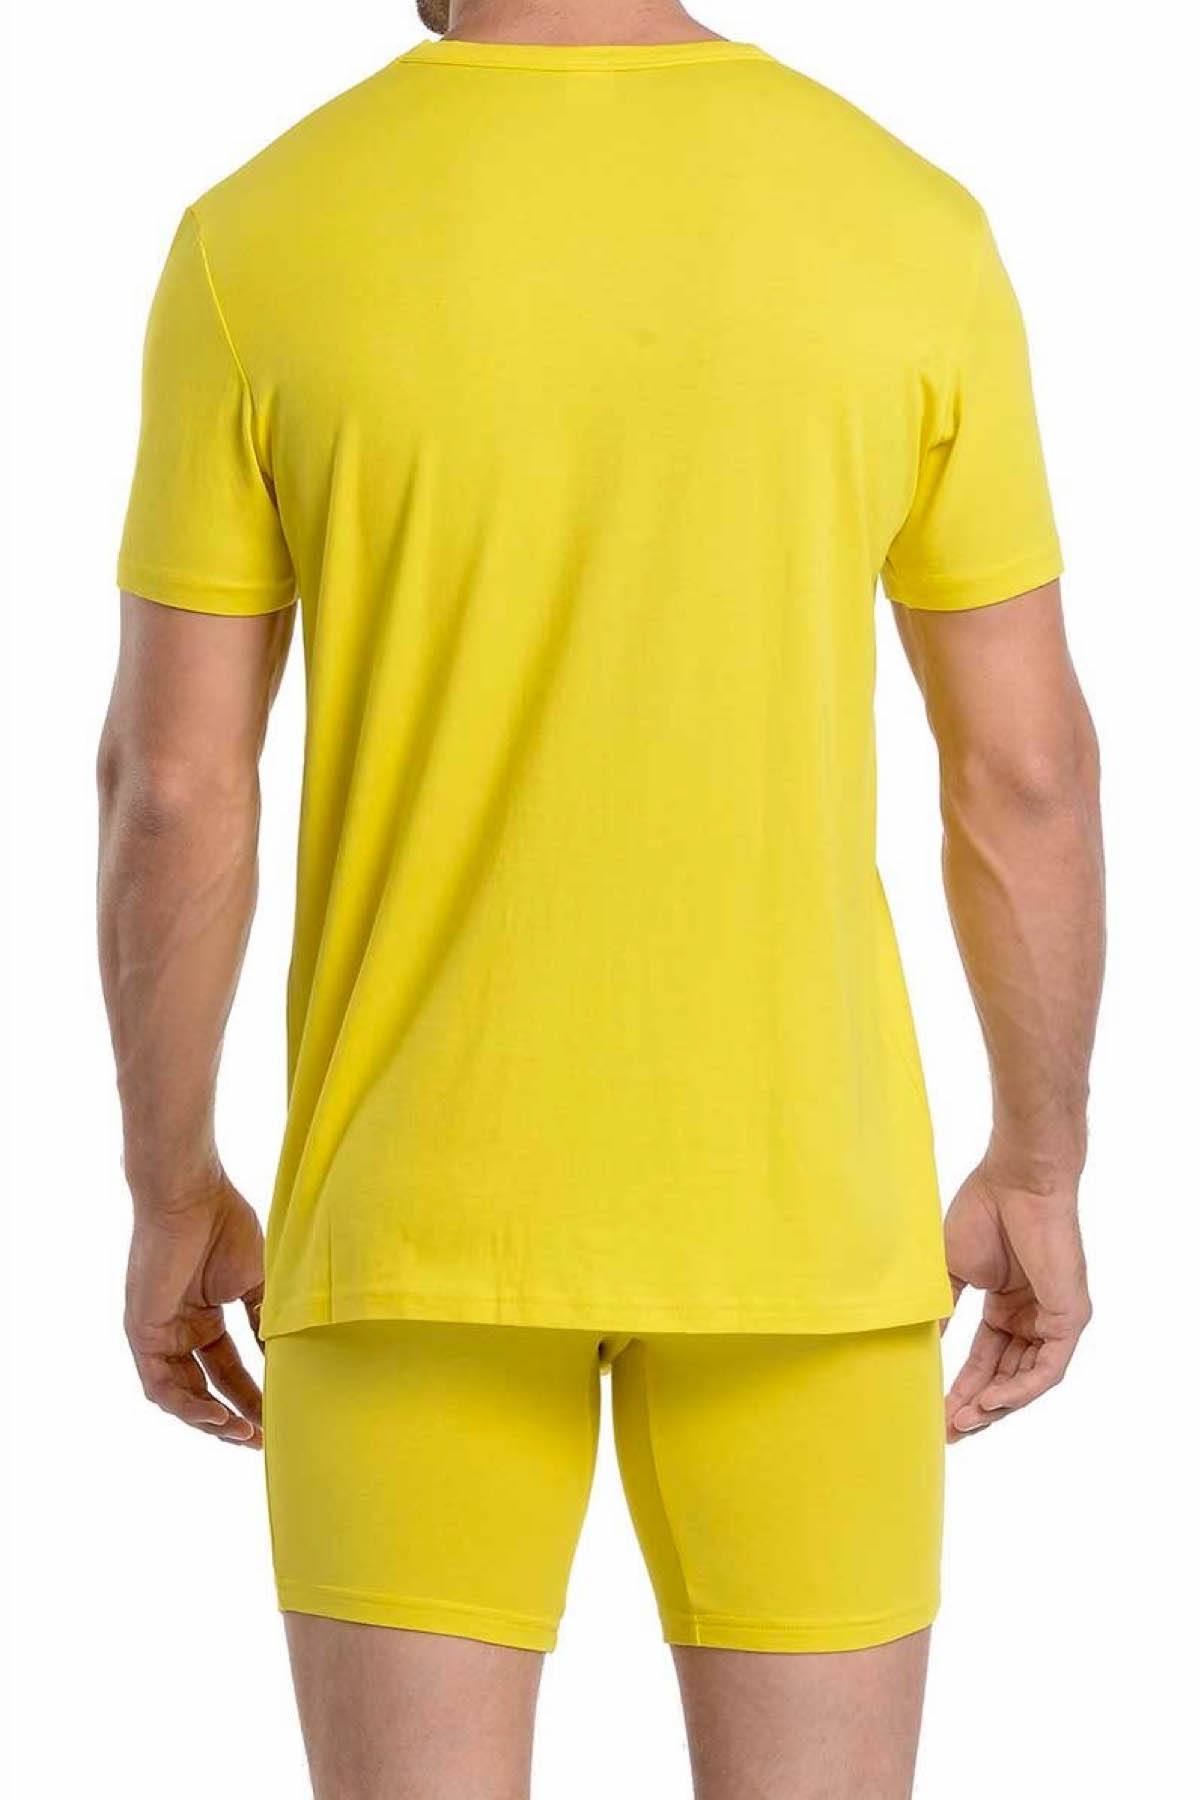 Wood Yellow V-Neck Shirt